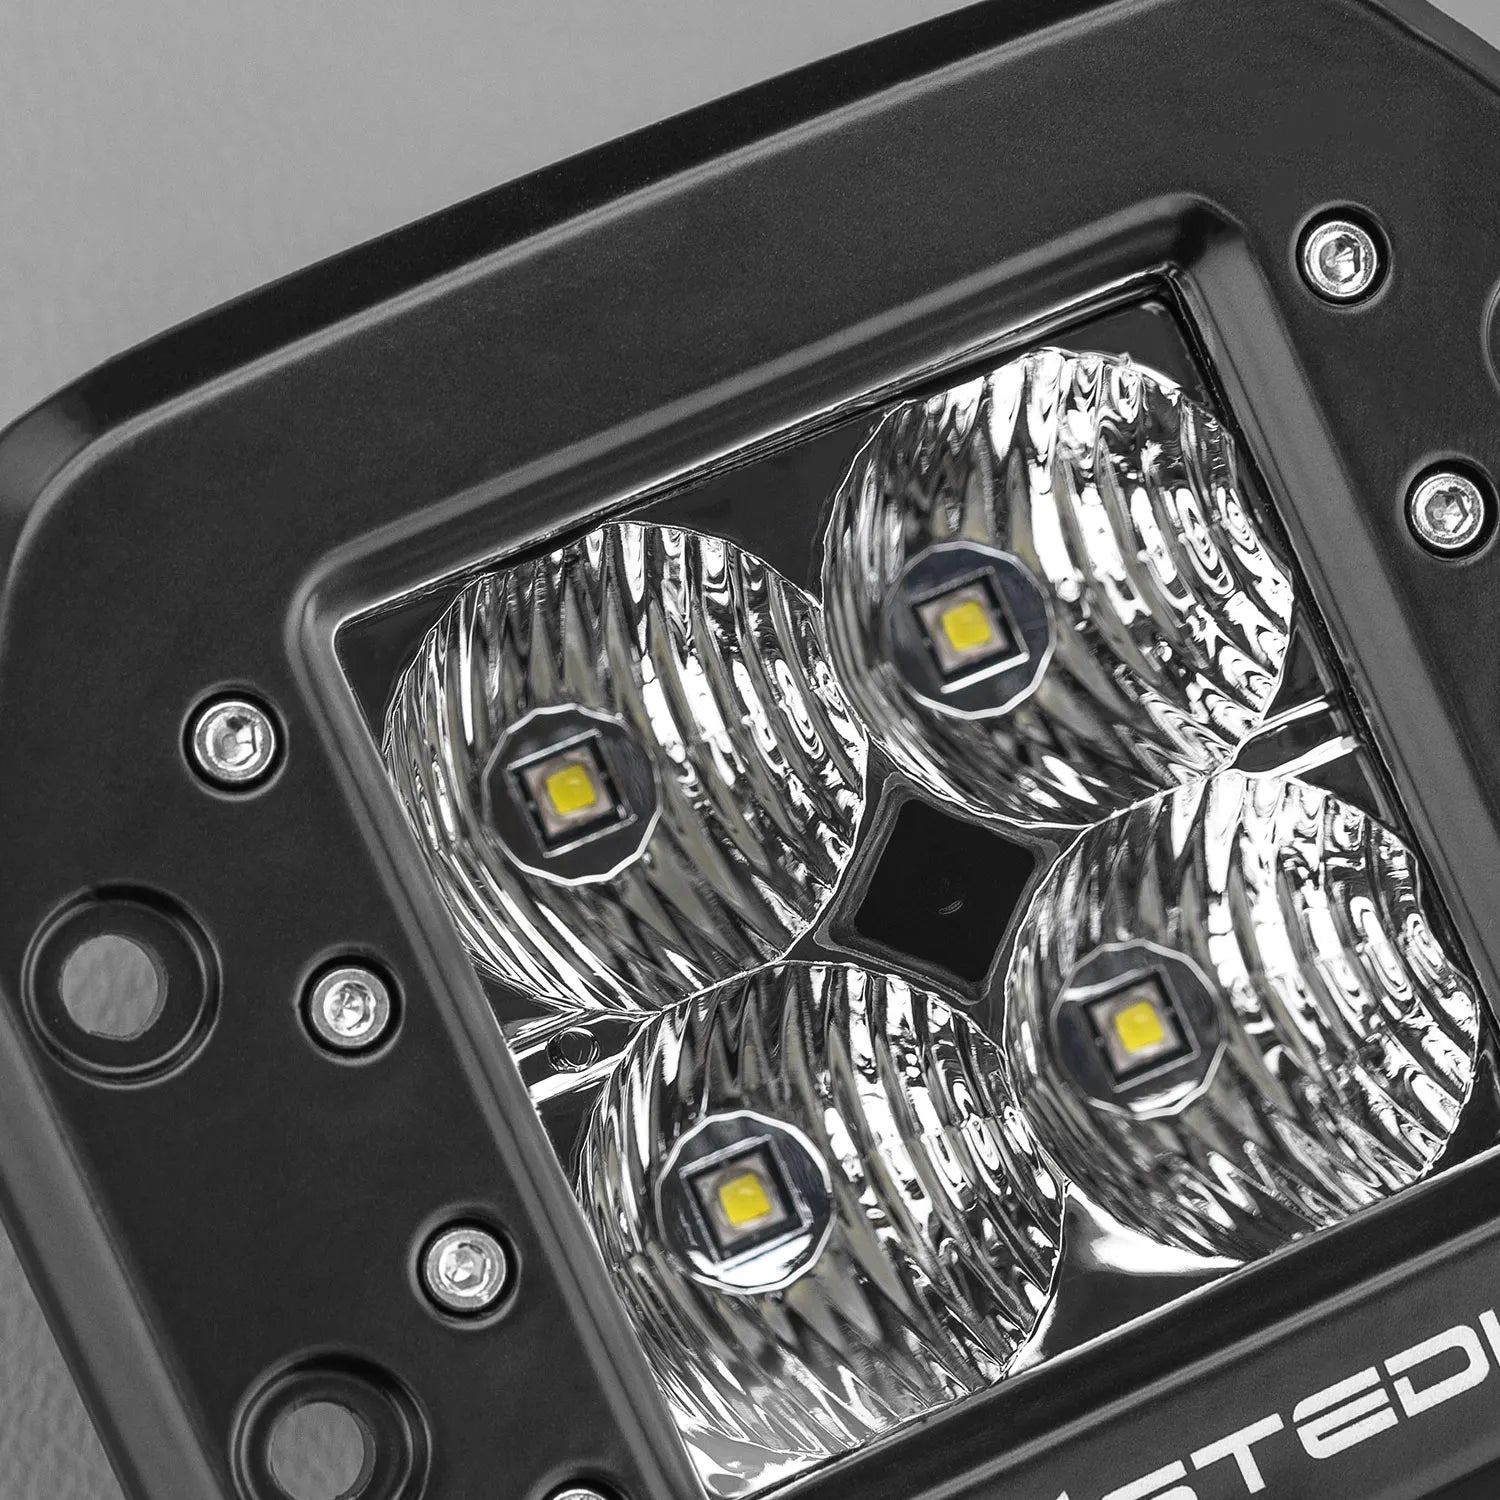 STEDI C4 Black Edition Einbau LED Light (Flood)